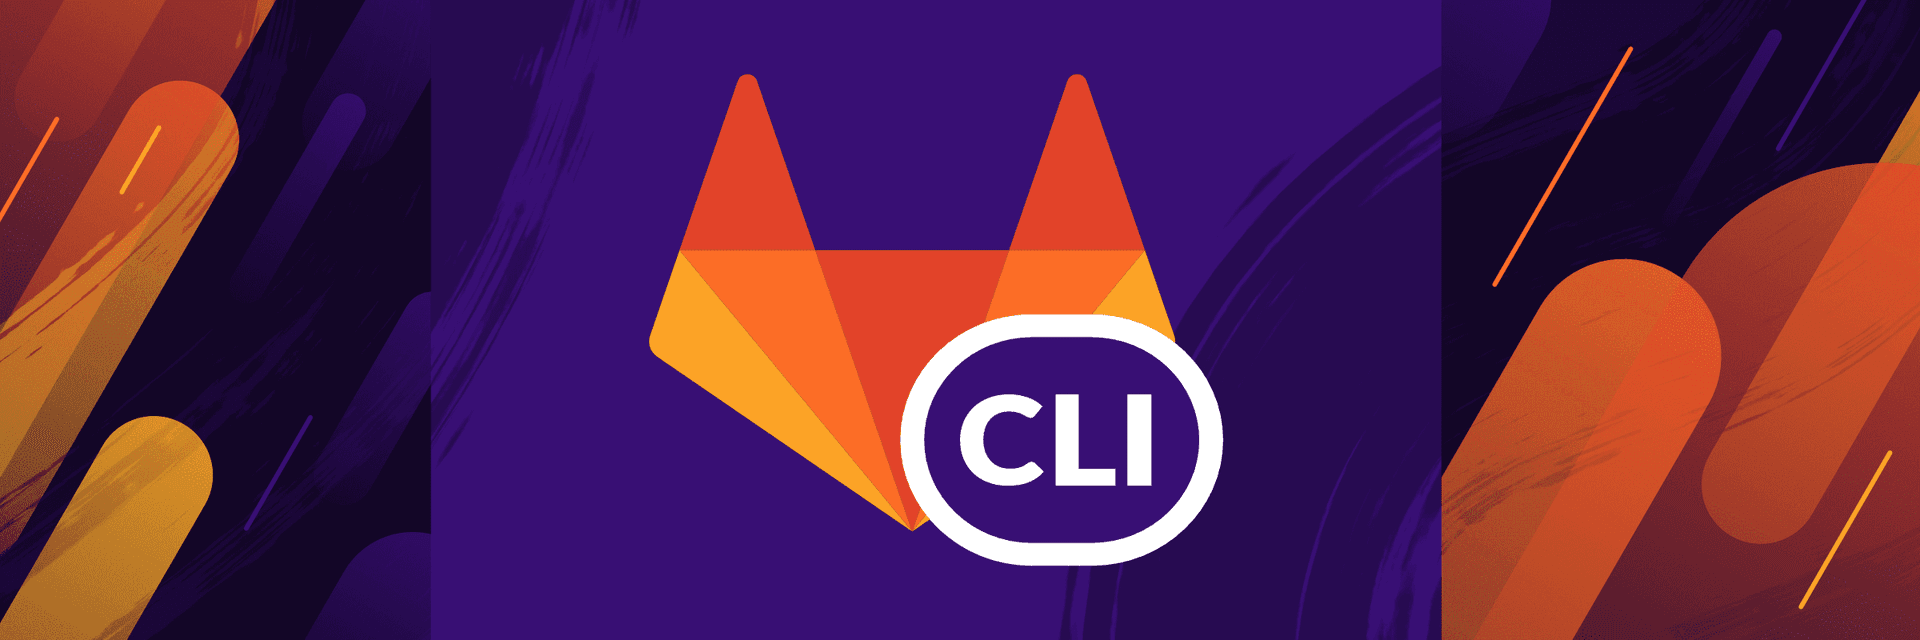 Introducing: GitLab CLI